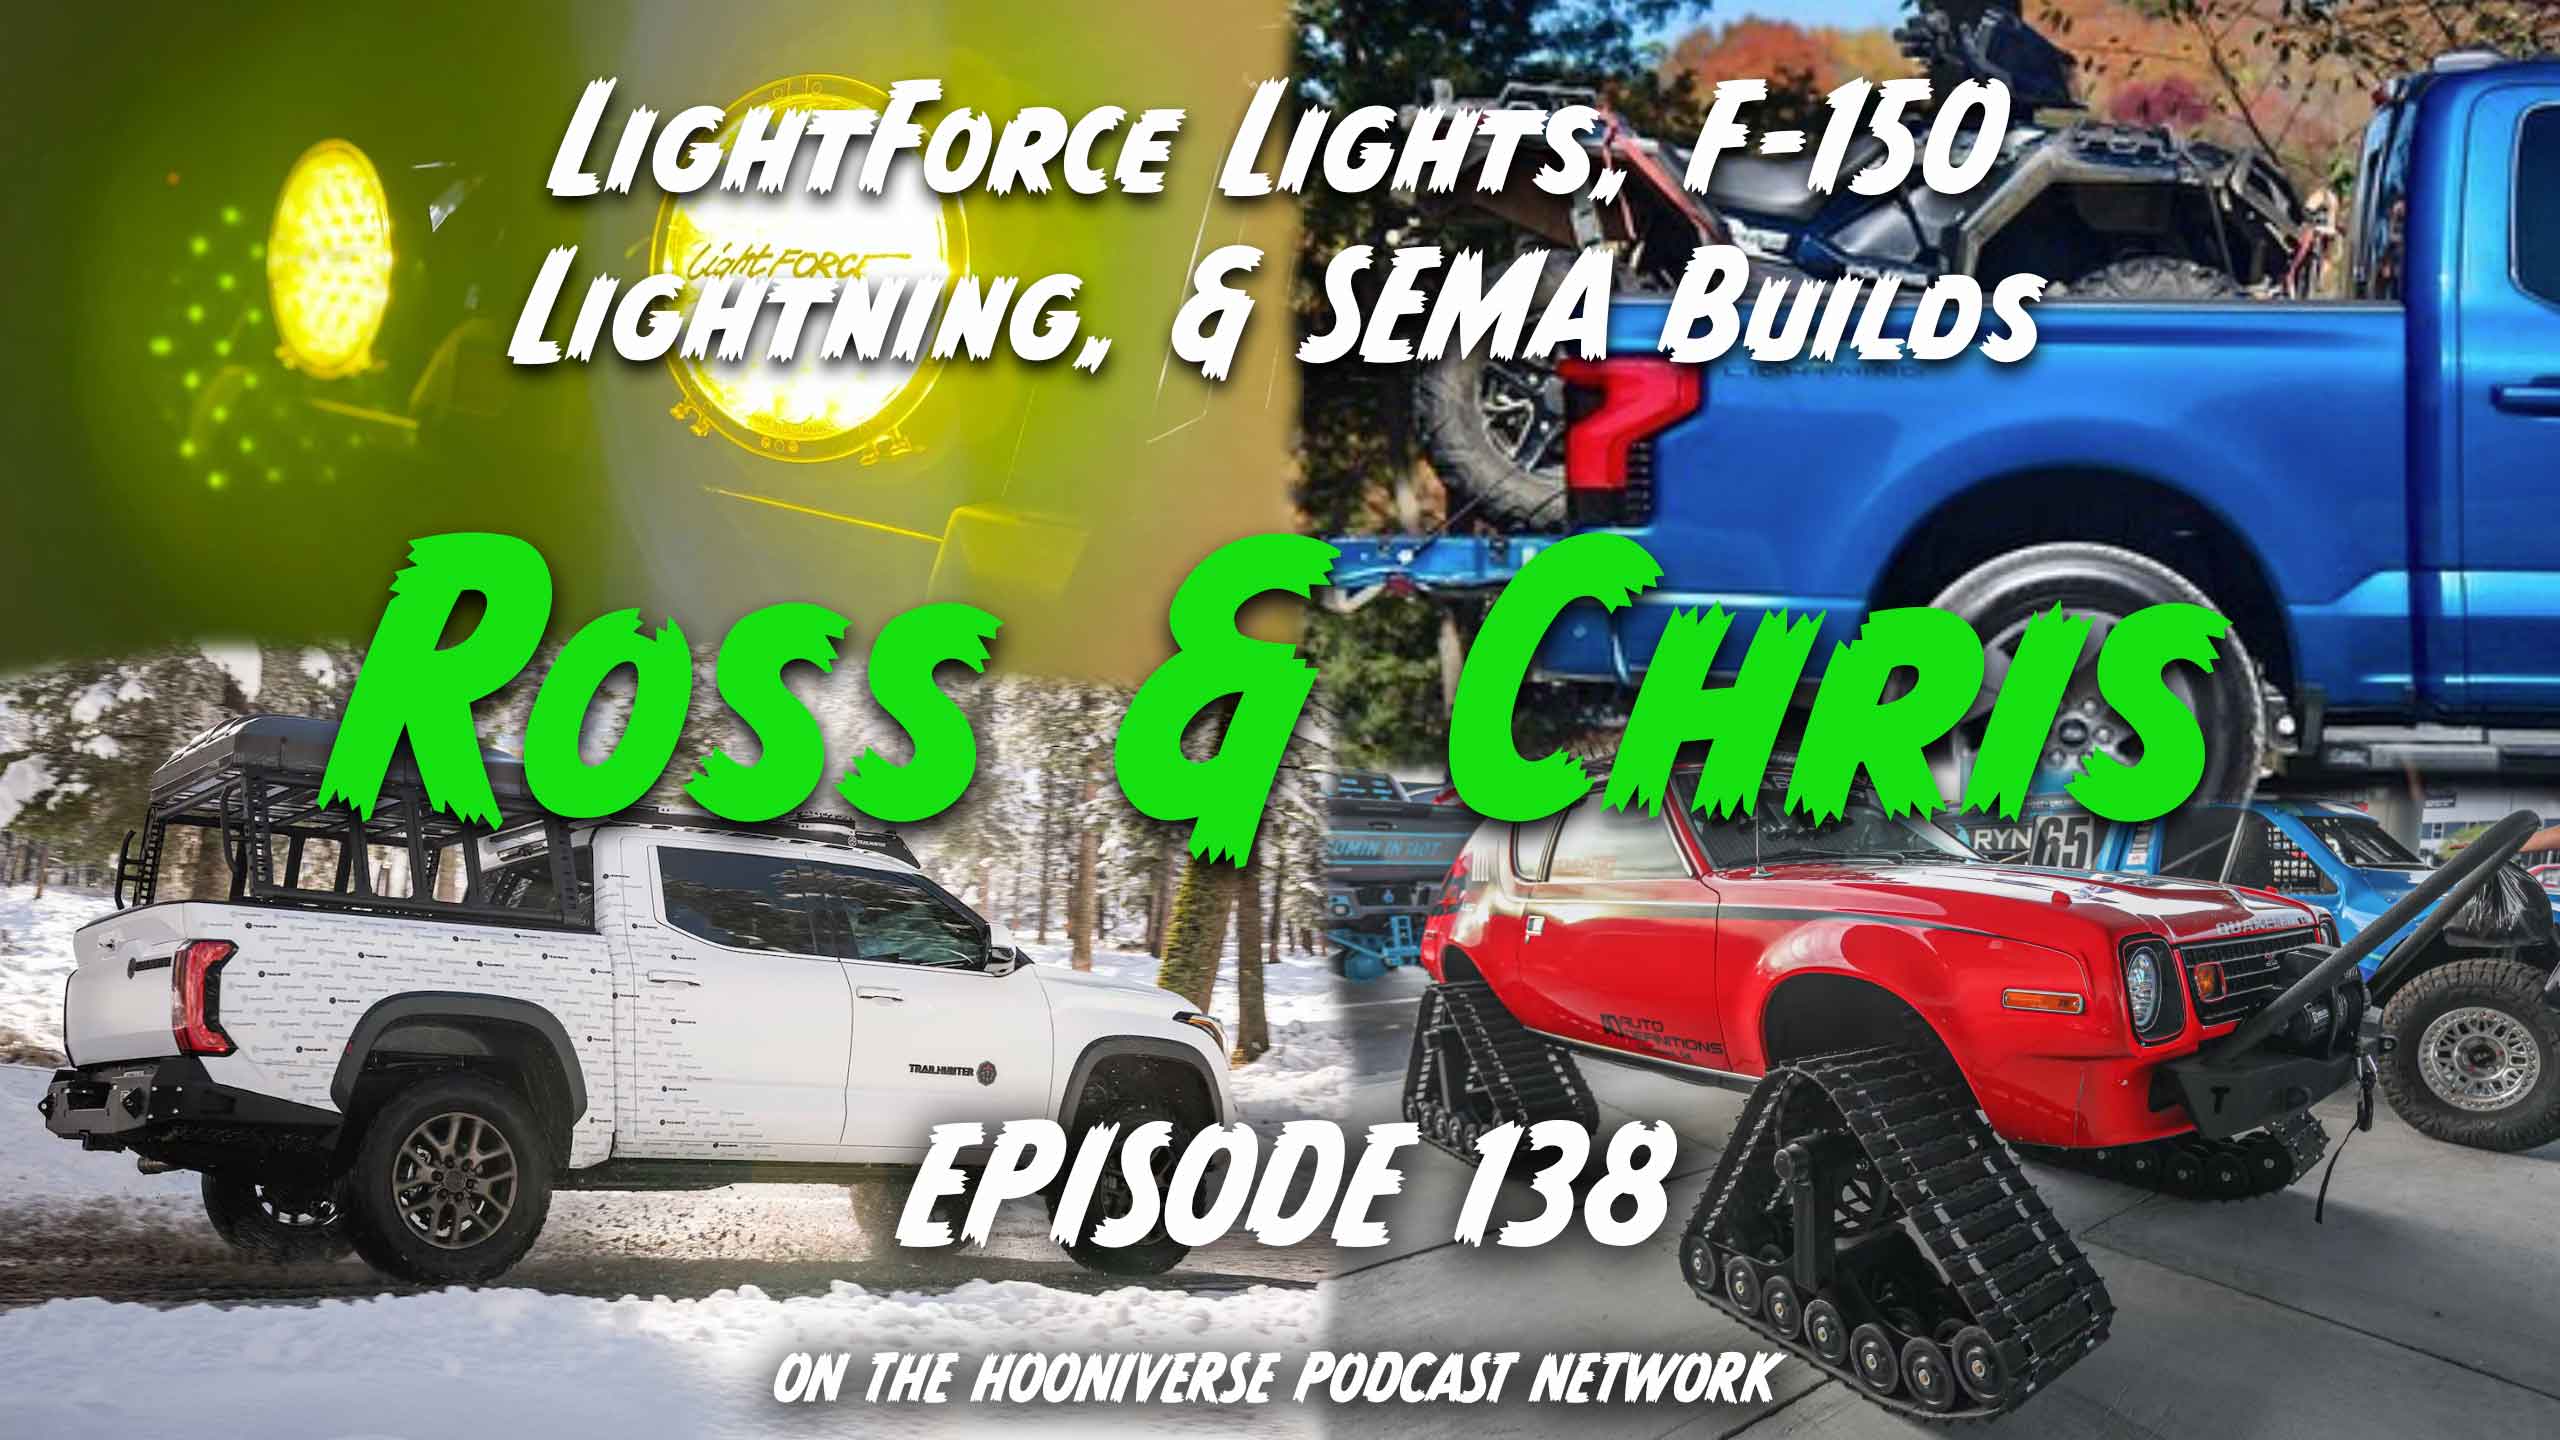 LightForce-Lights-Pelican-Flashlight-F150-Lightning-Off-The-Road-Again-Episode-138